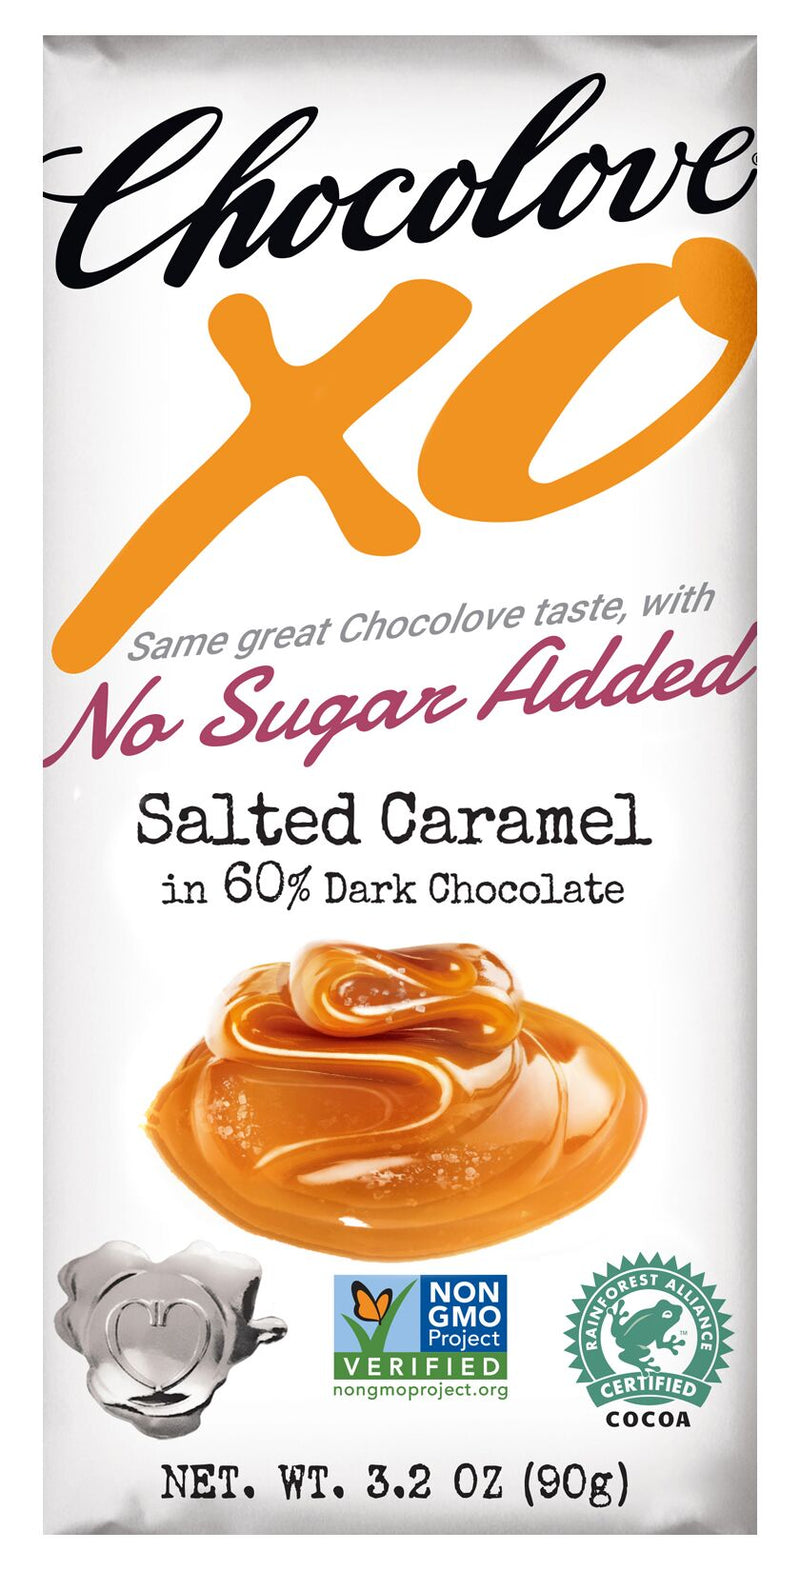 Chocolove XO No Sugar Added 60% Dark Chocolate Bars